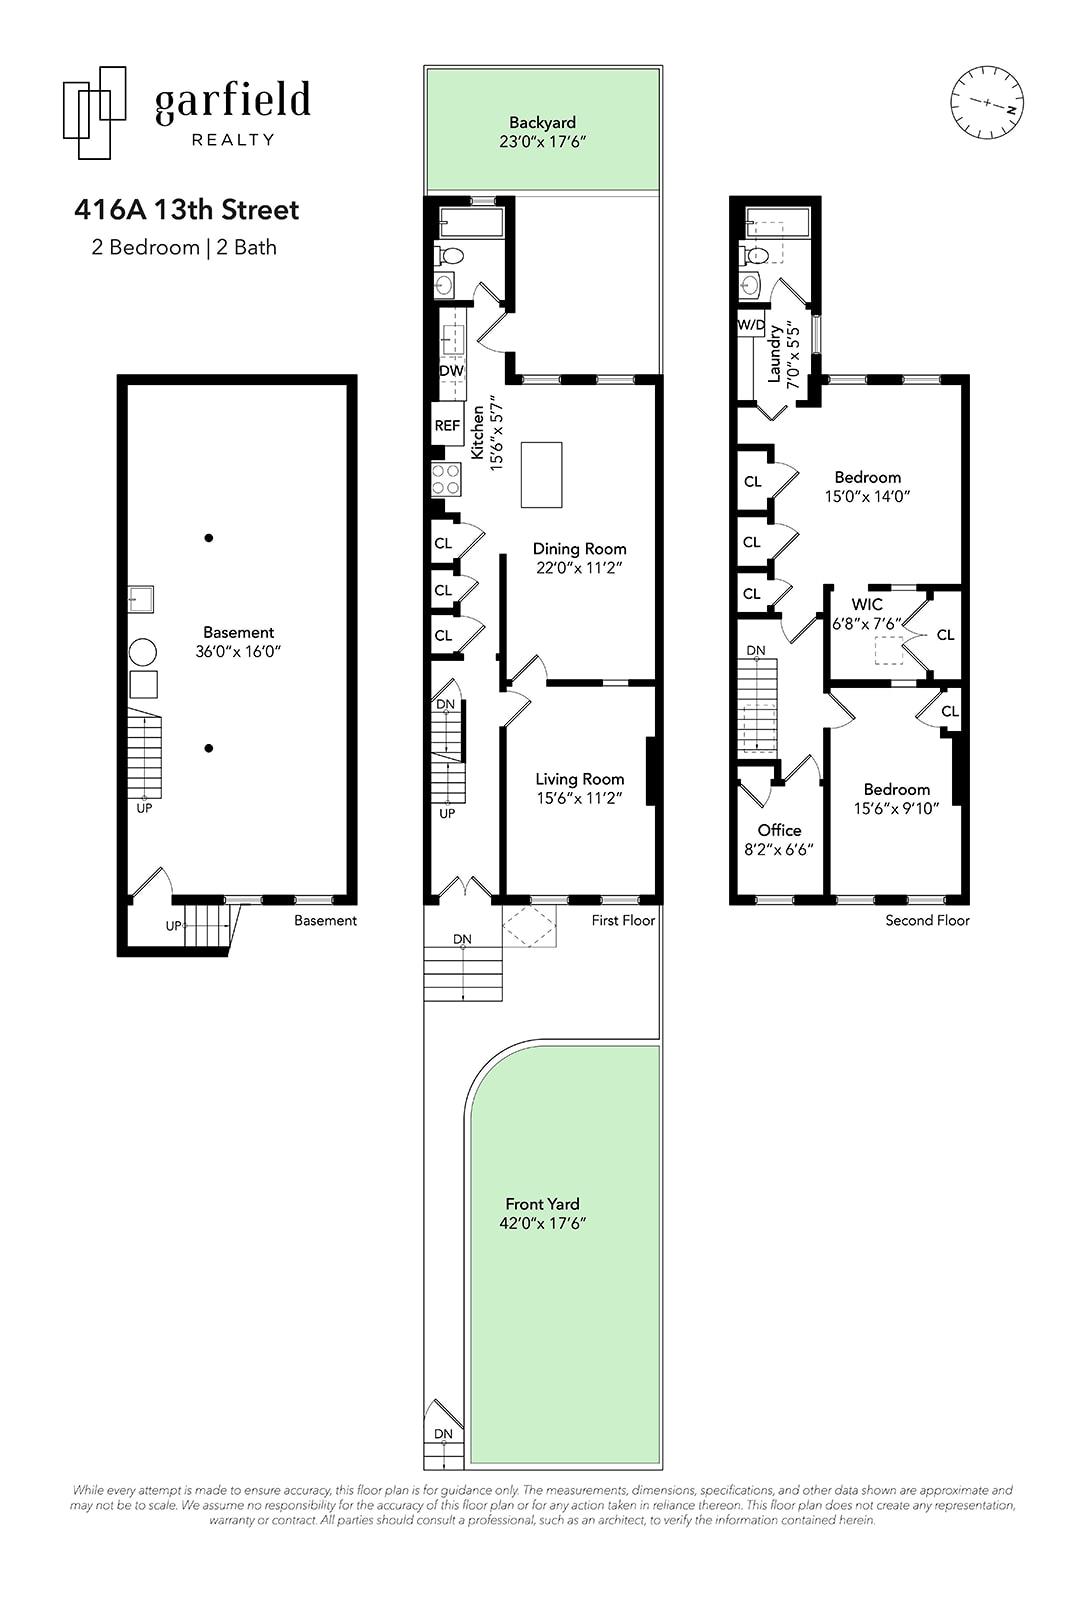 Floorplan of 416a 13th St